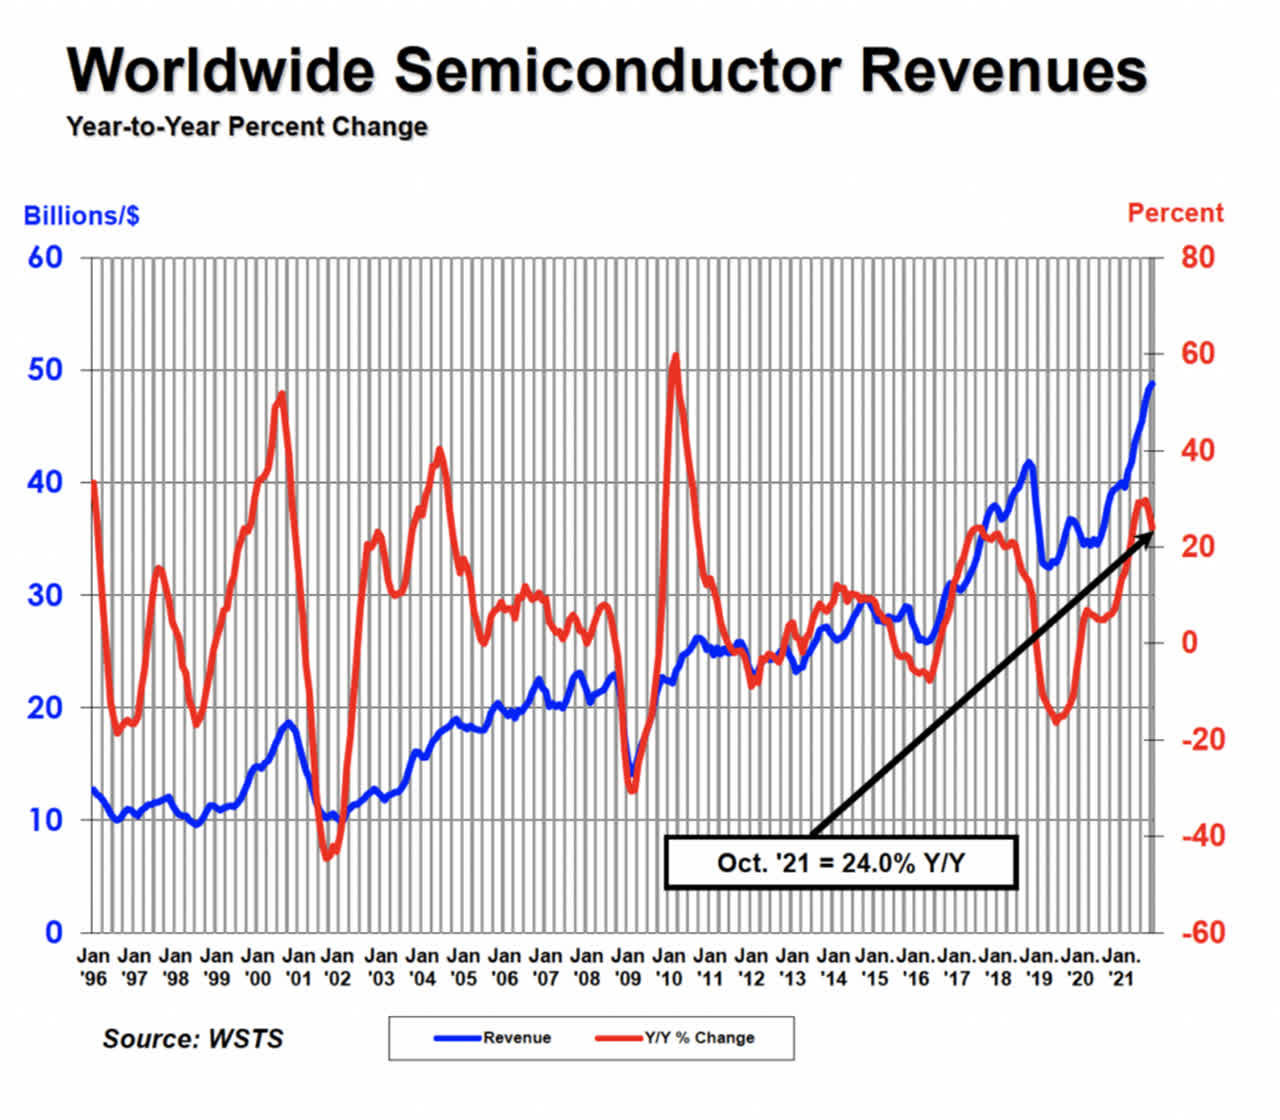 worldwide semiconductor revenues 1996-2021